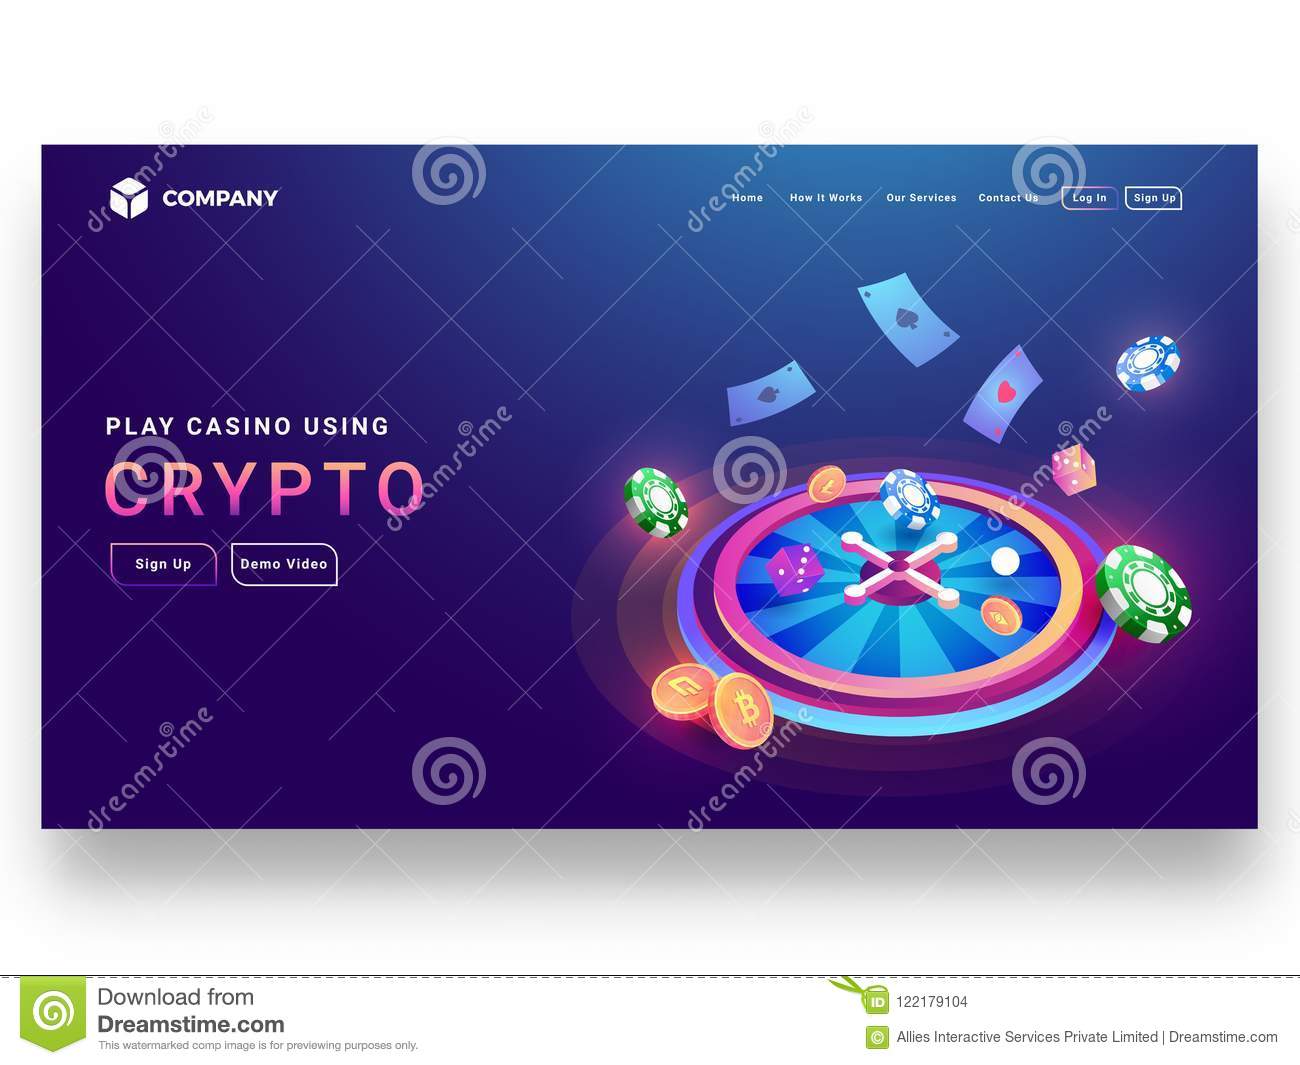 Loki bitcoin casino free spins no deposit